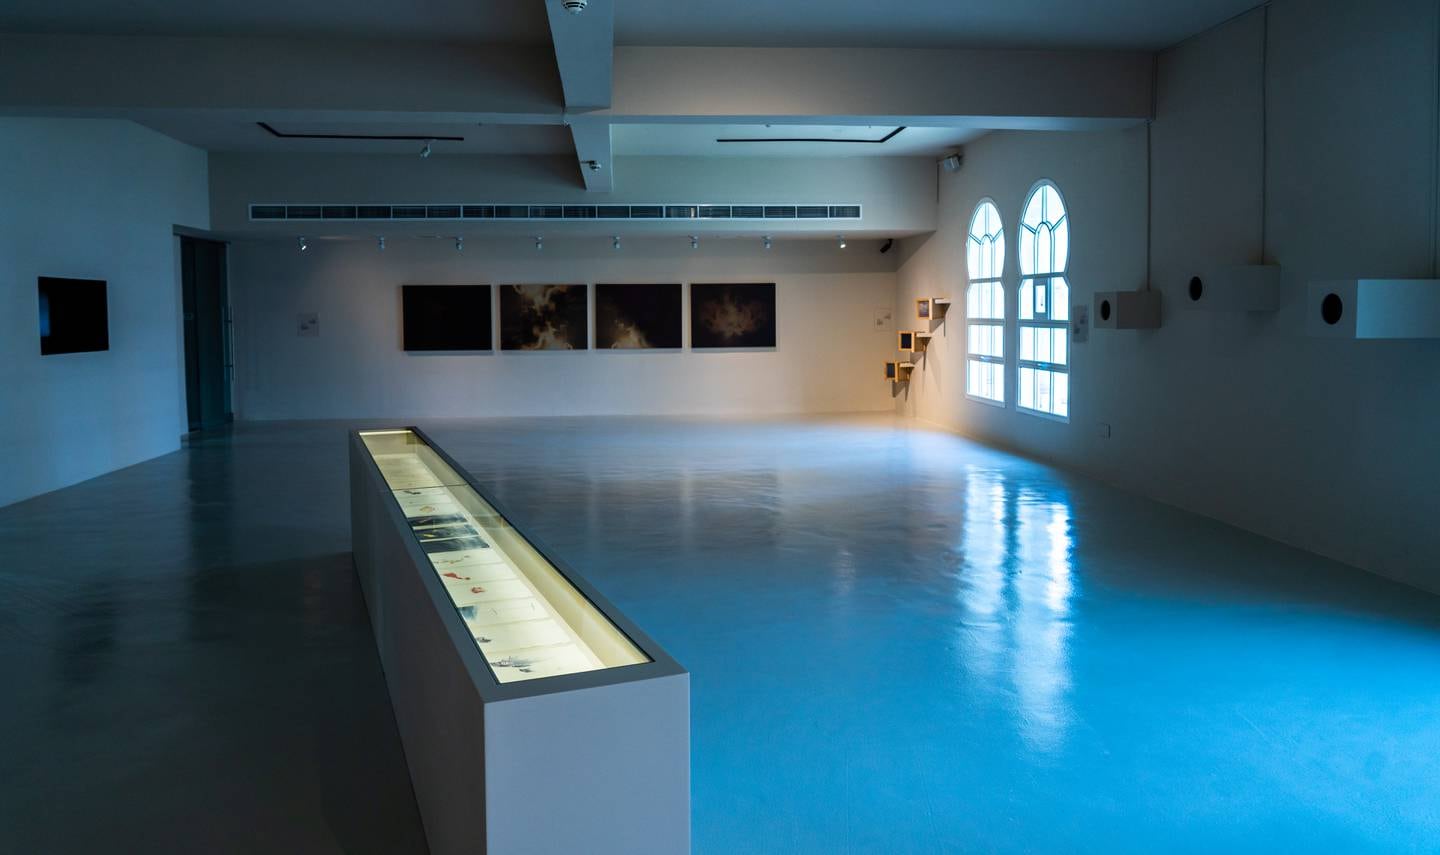 Installation view of Towards Time at Maraya Art Centre, Sharjah. Photo: Maraya Art Centre